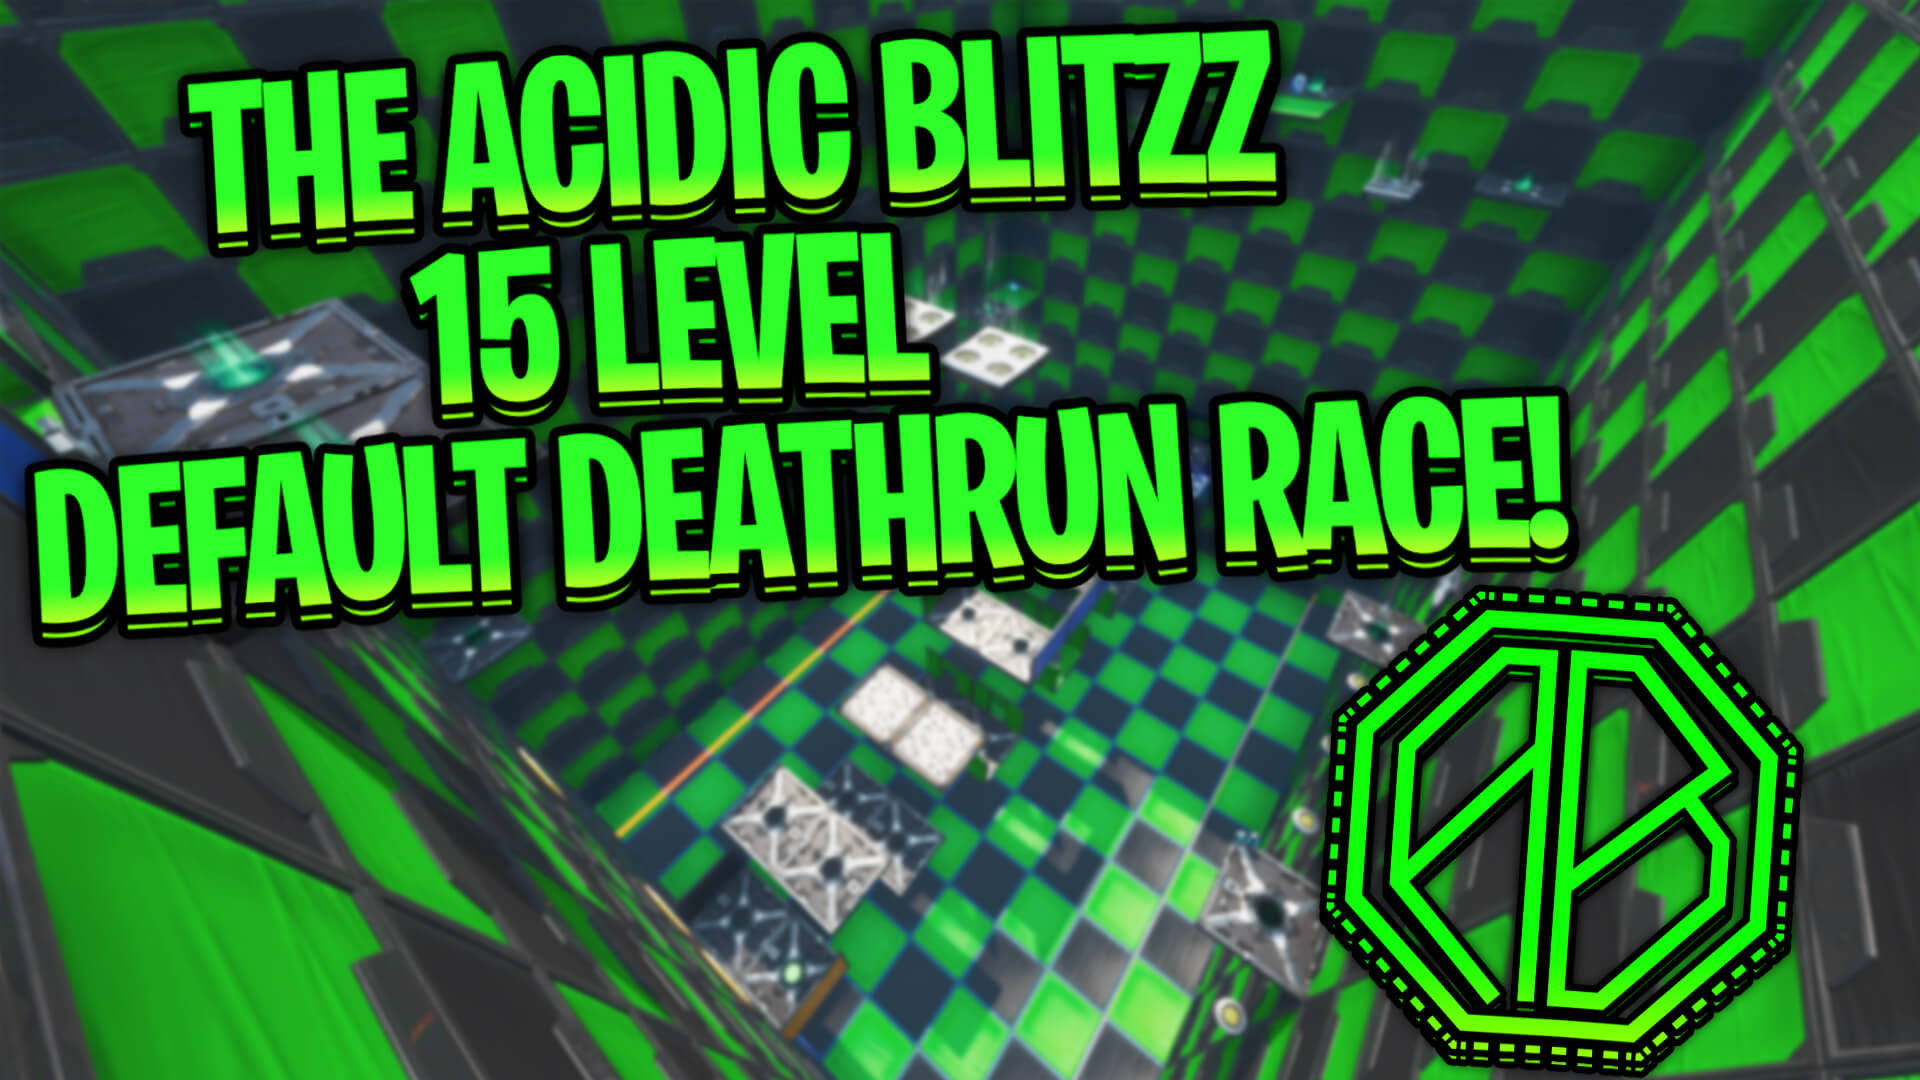 THE ACIDIC BLITZZ 15 LEVEL DEATHRUN RACE